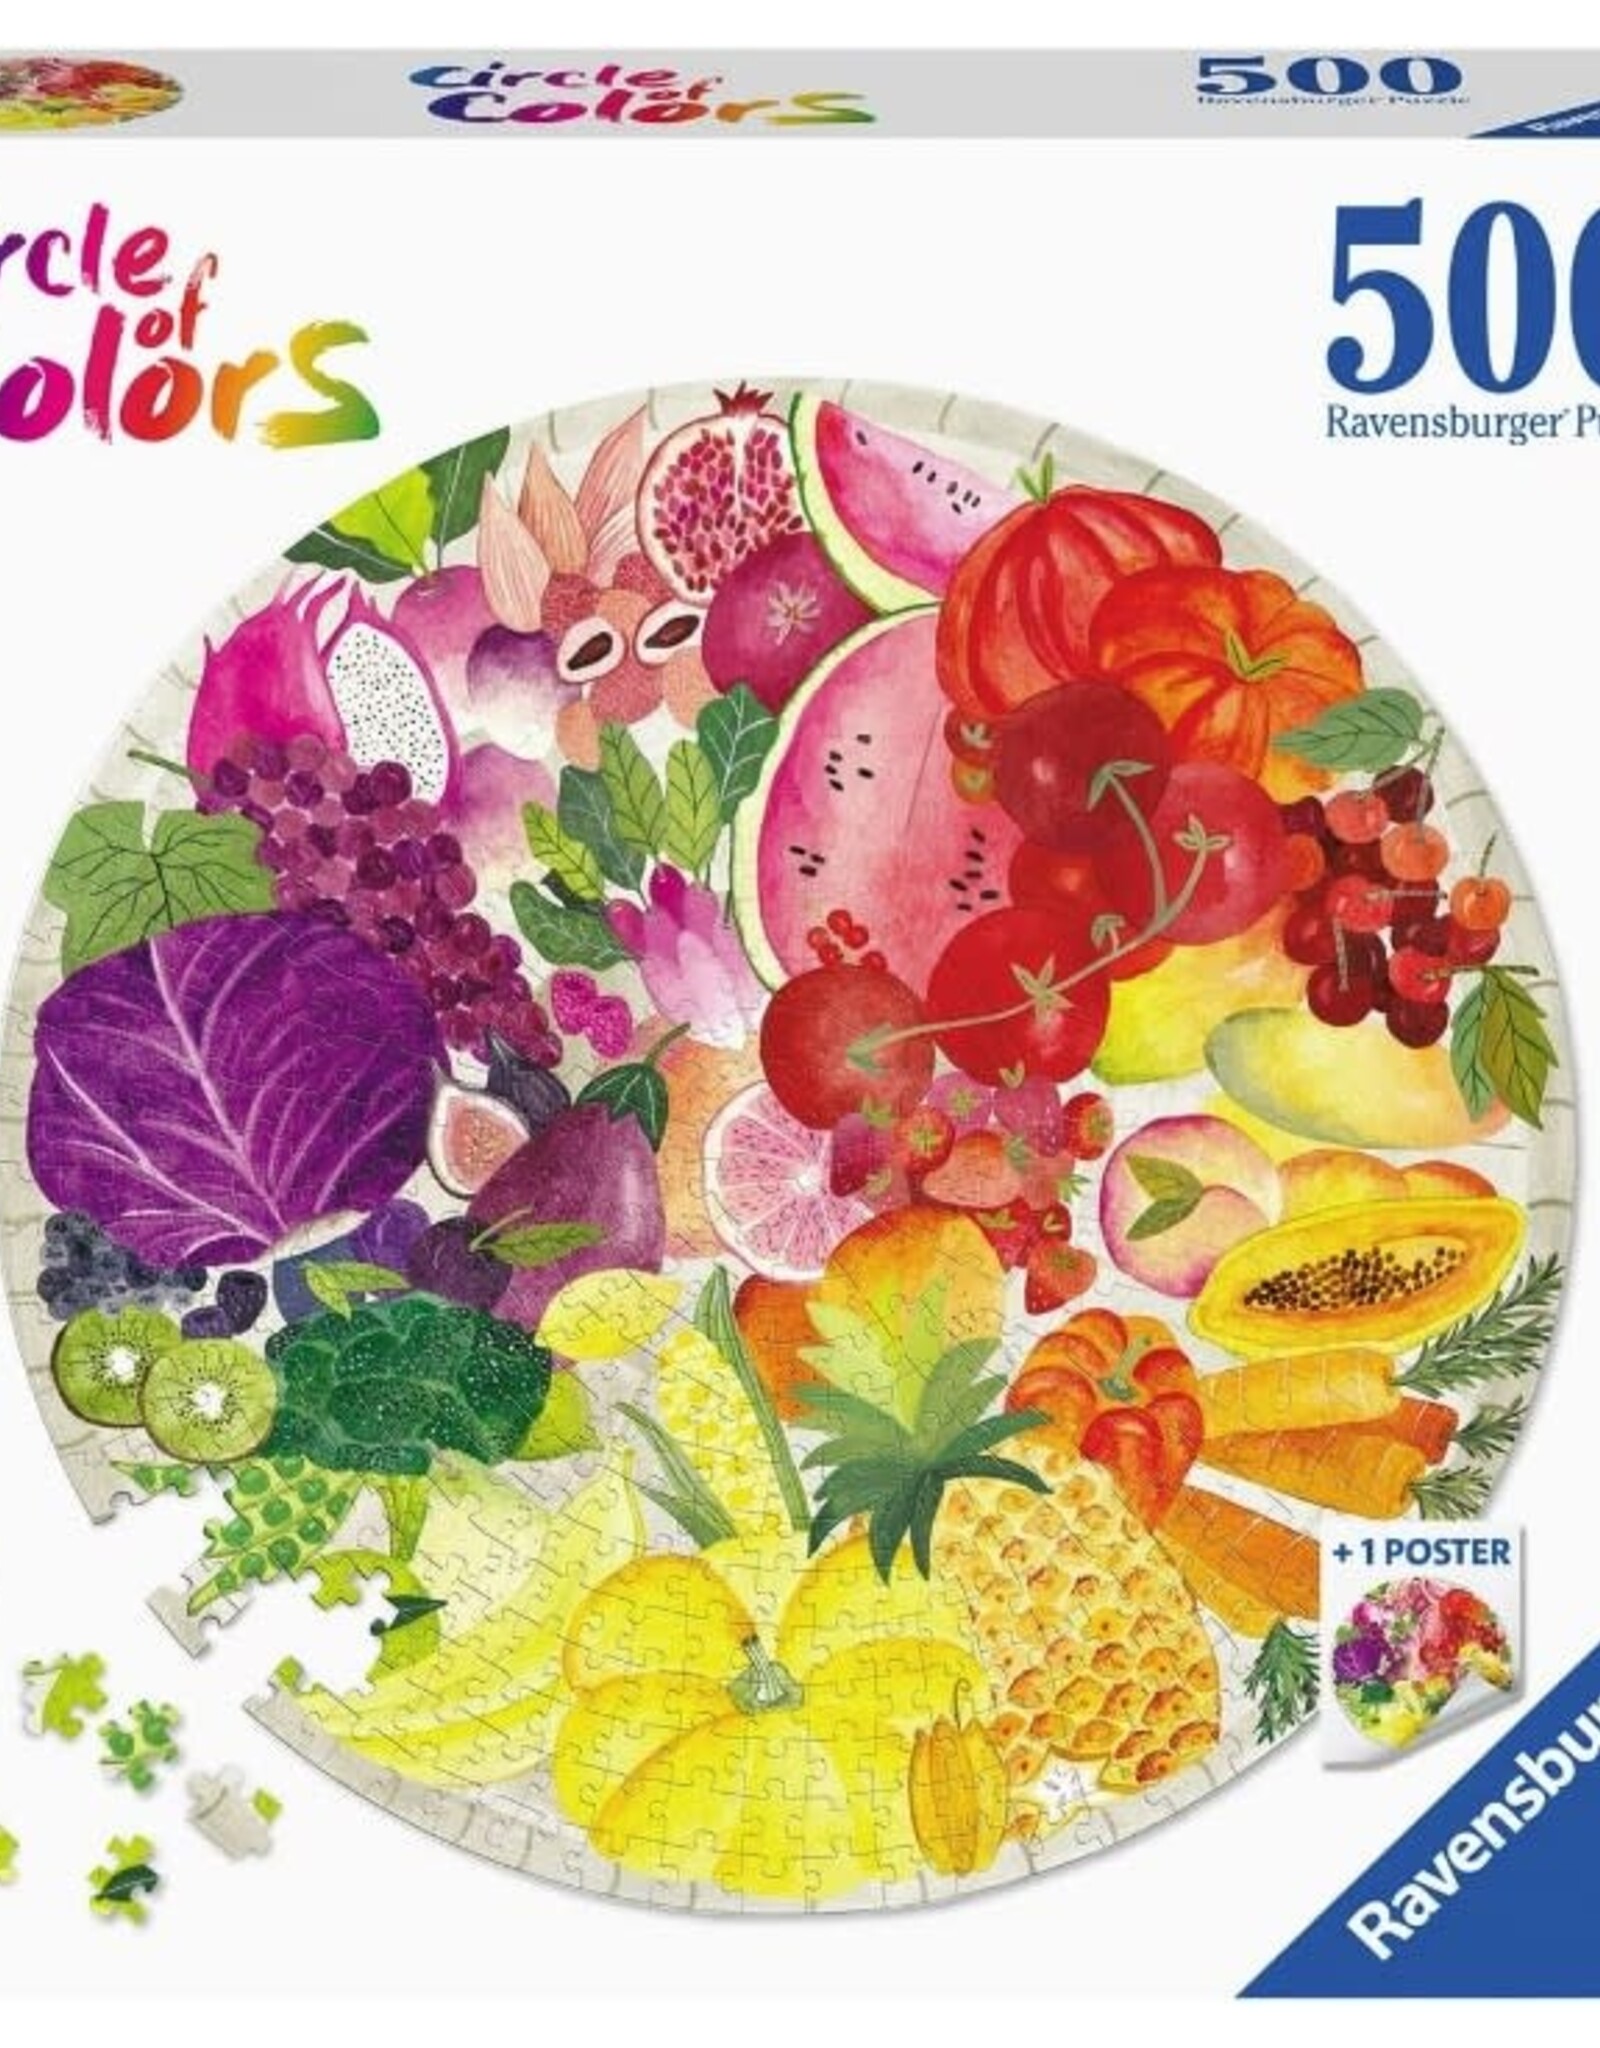 Ravensburger Fruits and Vegetables 500pc Round RAV17169